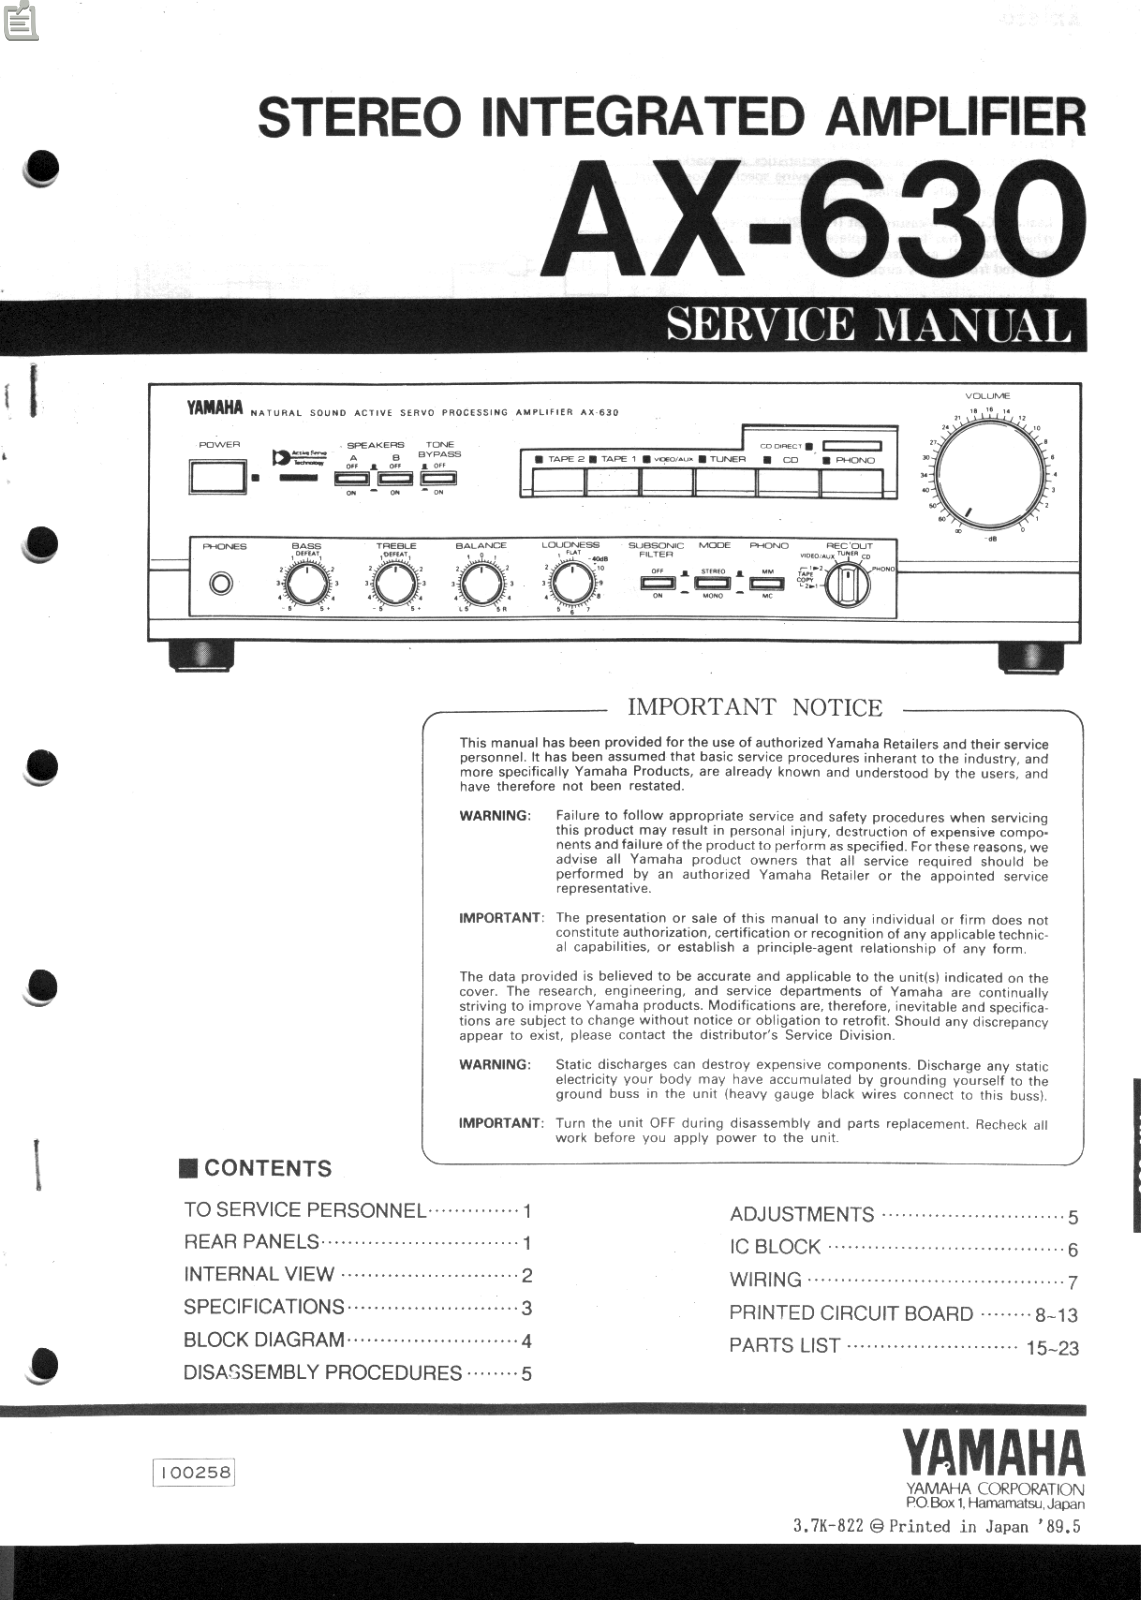 Yamaha AX-630 Service manual